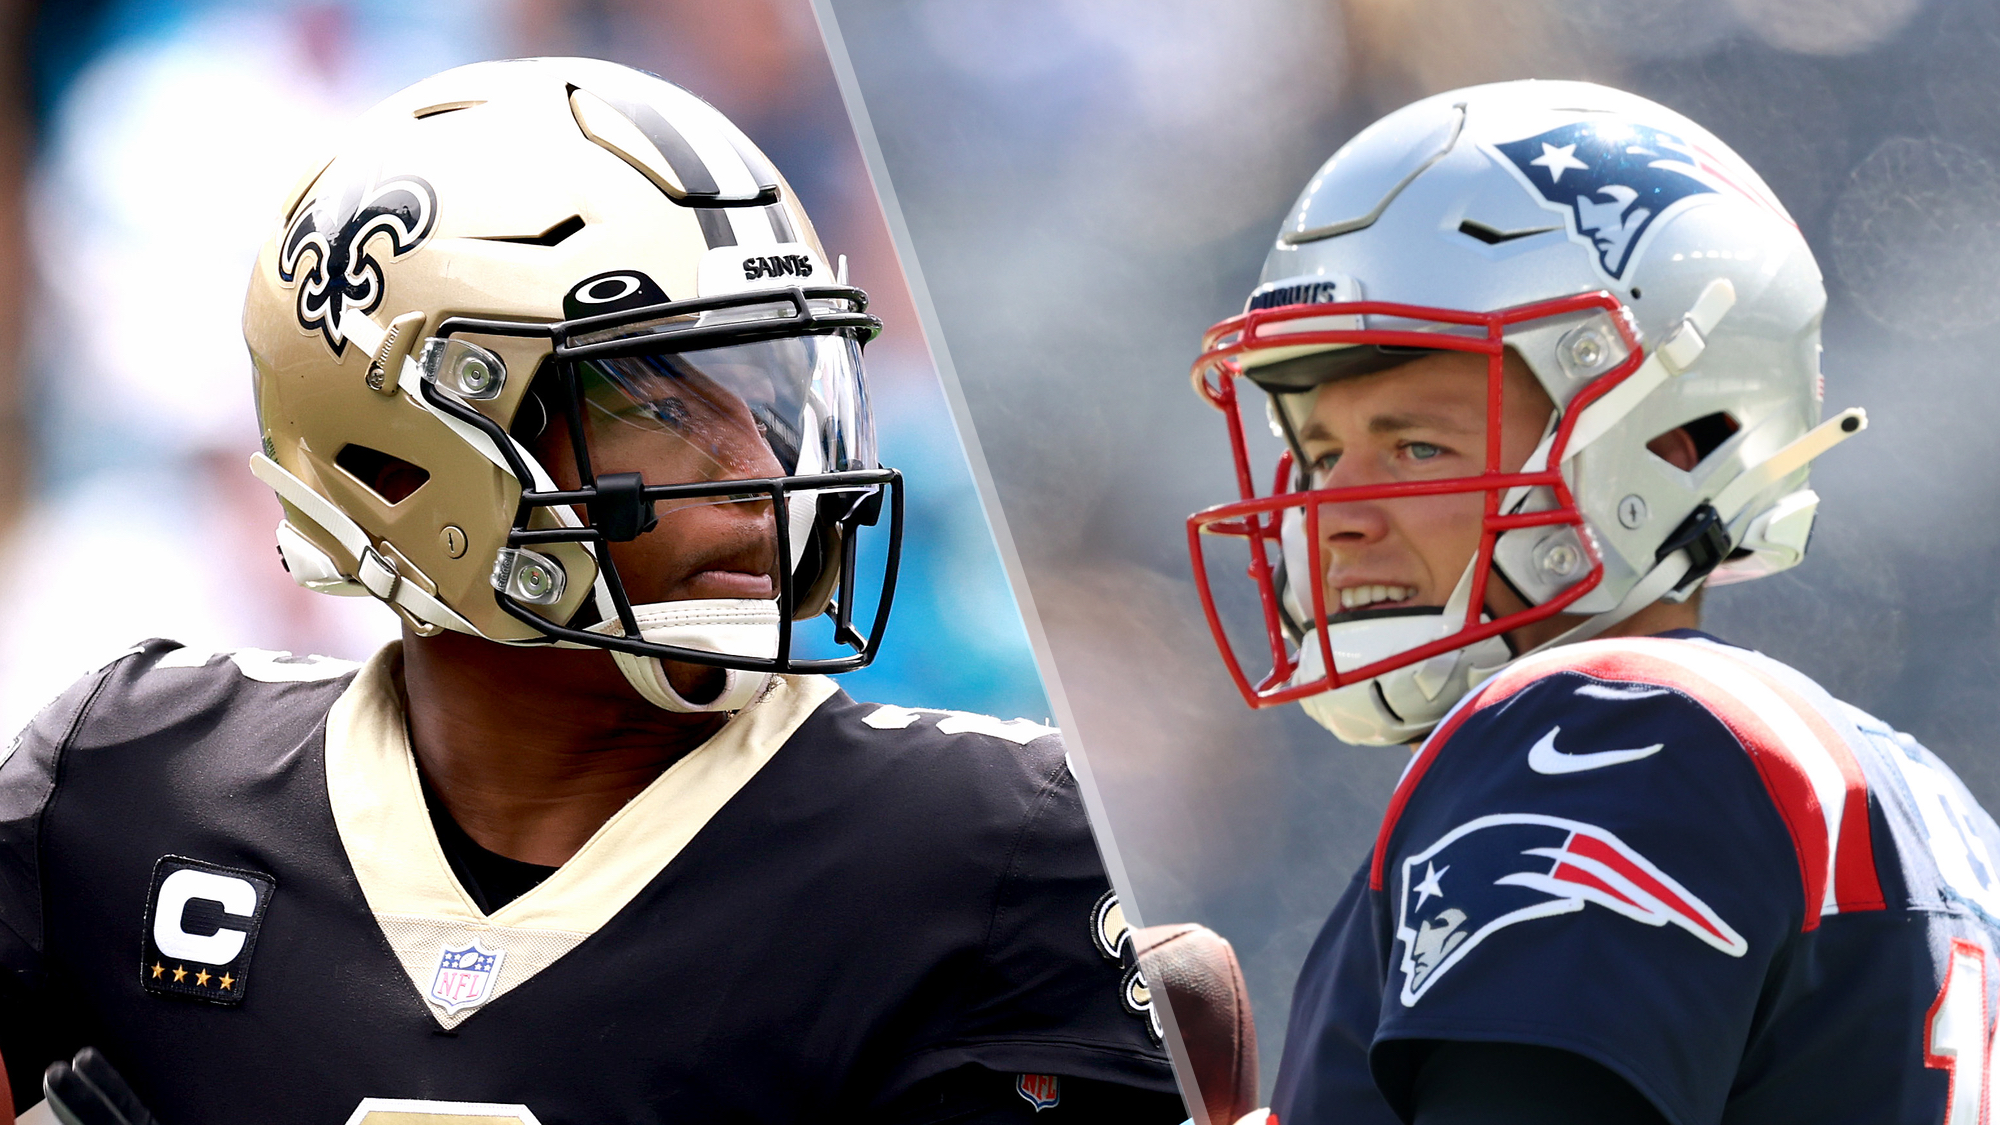 Saints vs Patriots live stream: How to watch NFL week 3 game online